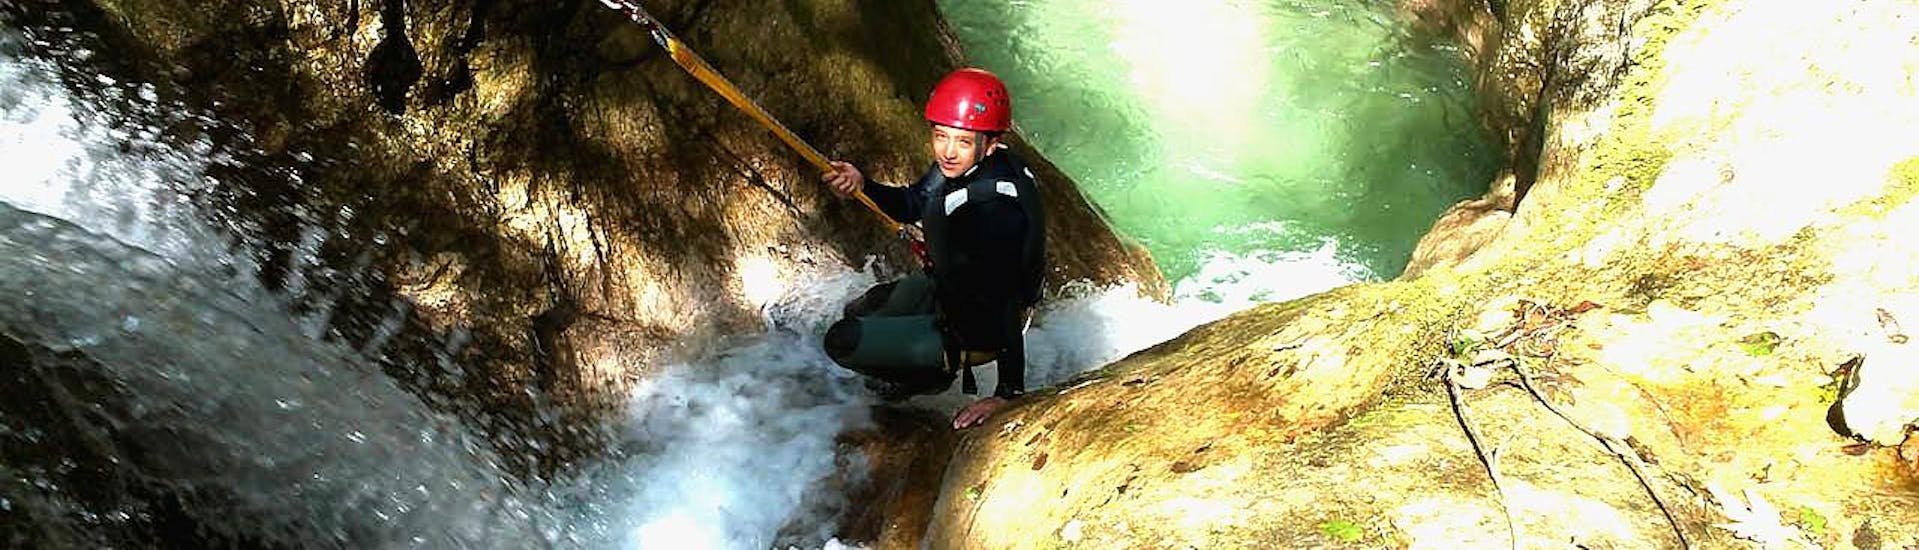 canyoning-in-the-palvico-baby-tour-trentino-climb-hero